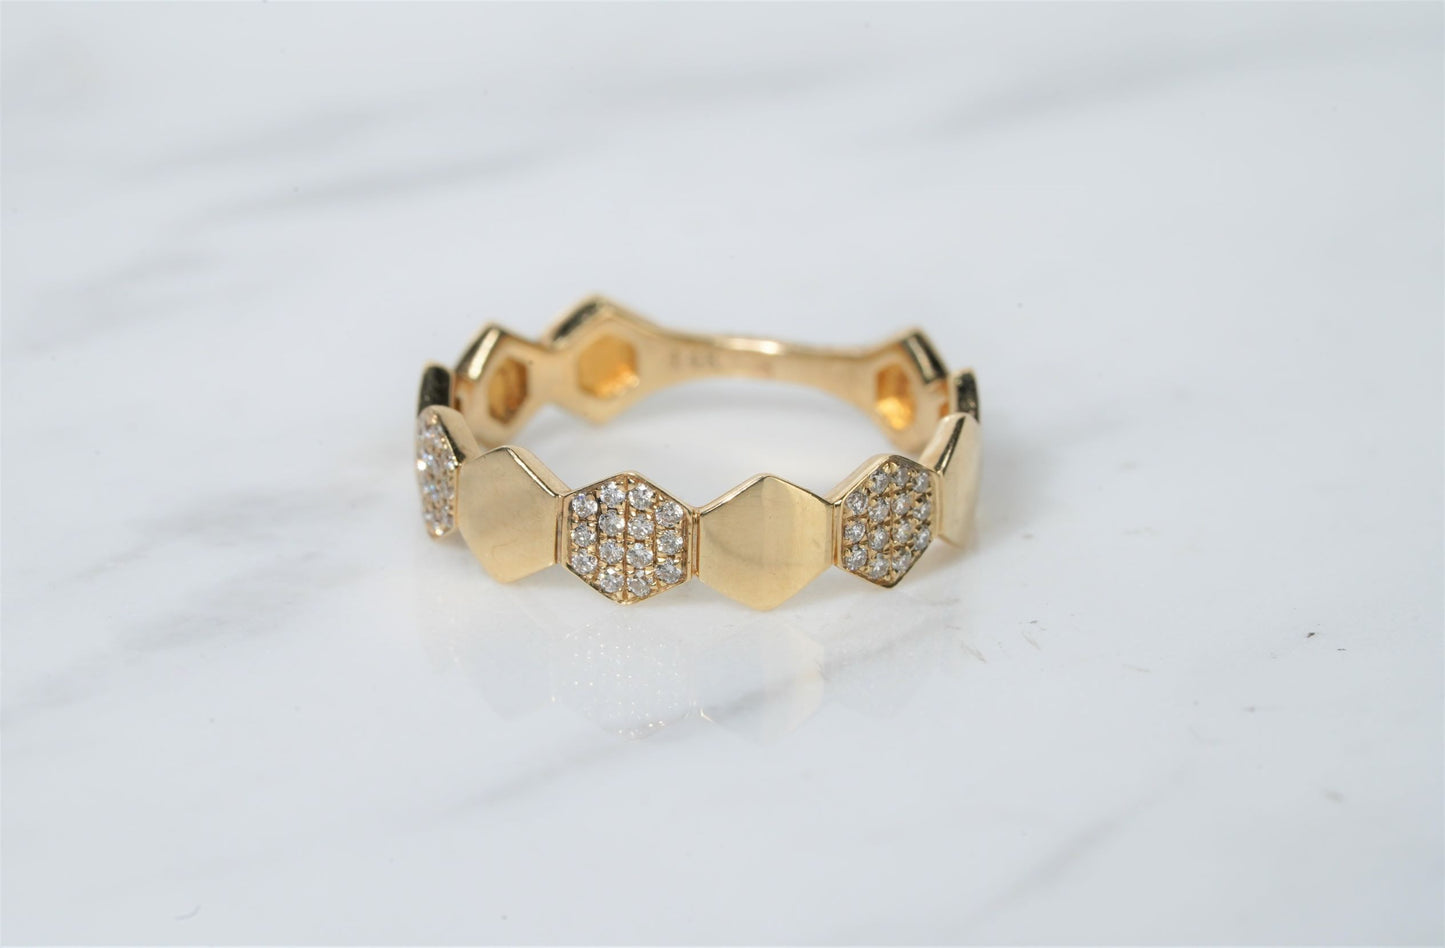 Hexagon shaped diamond ring